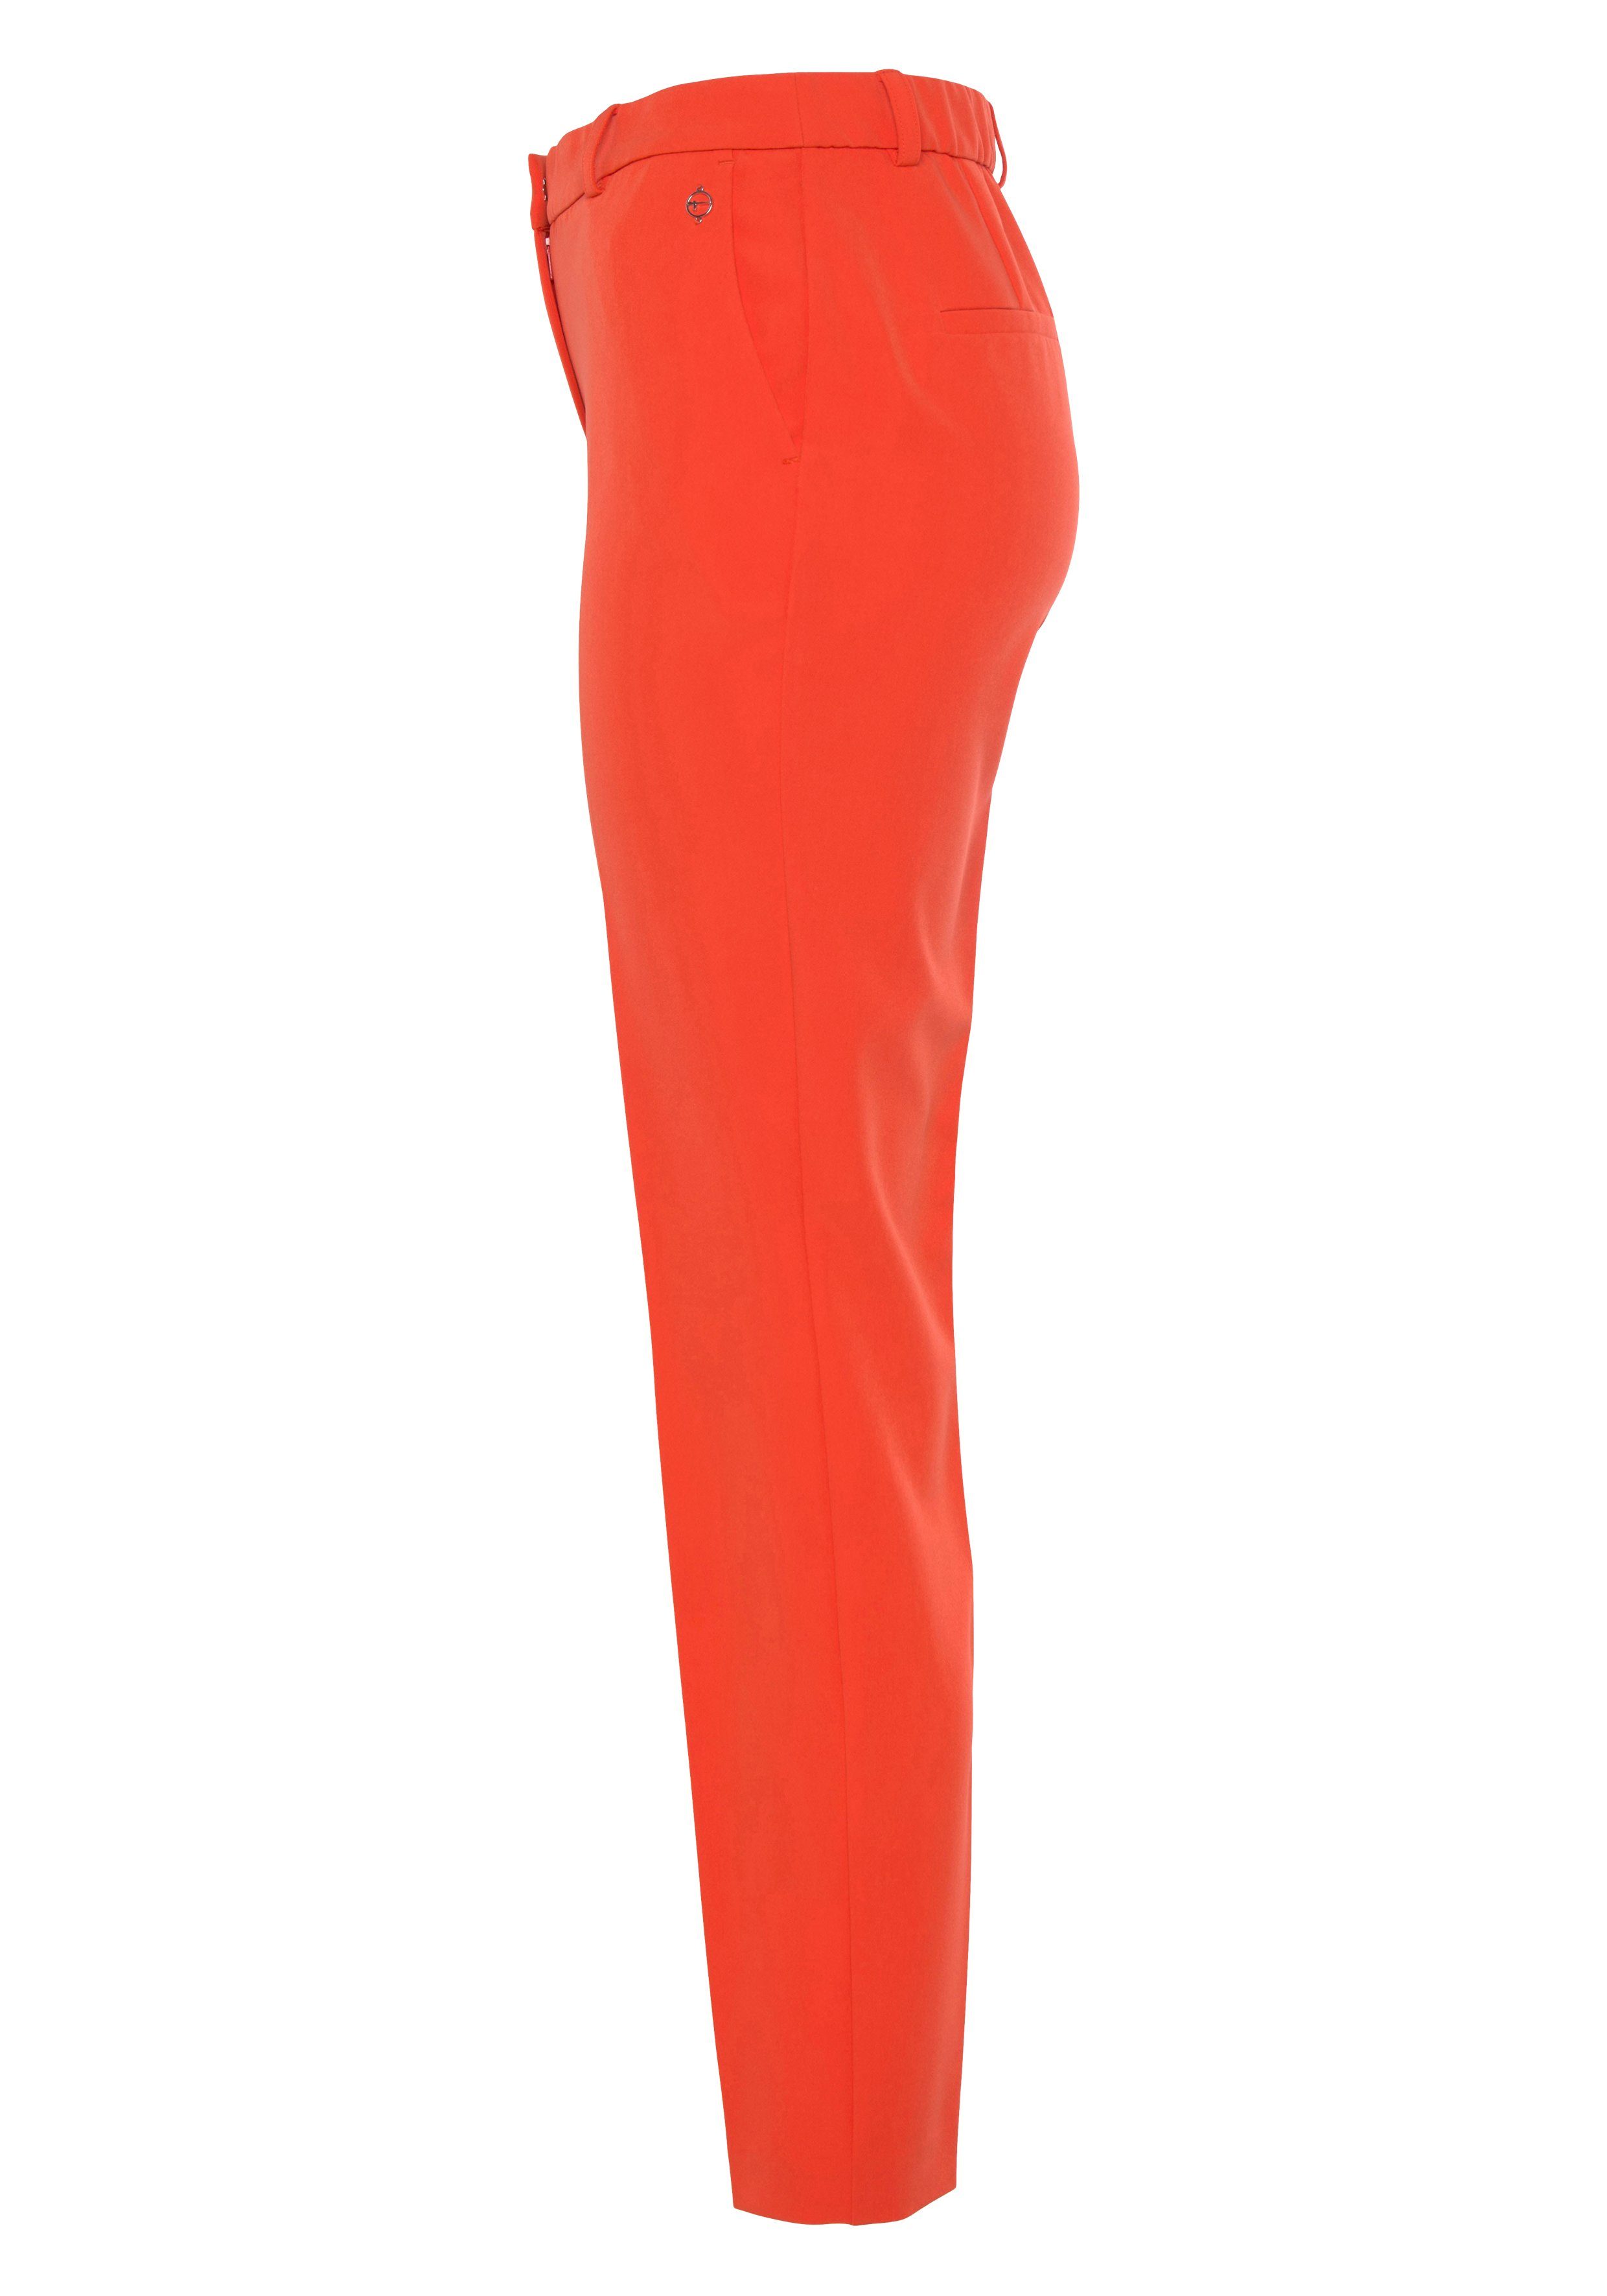 Tamaris Anzughose orange nachhaltigem Material) (Hose in aus Trendfarben